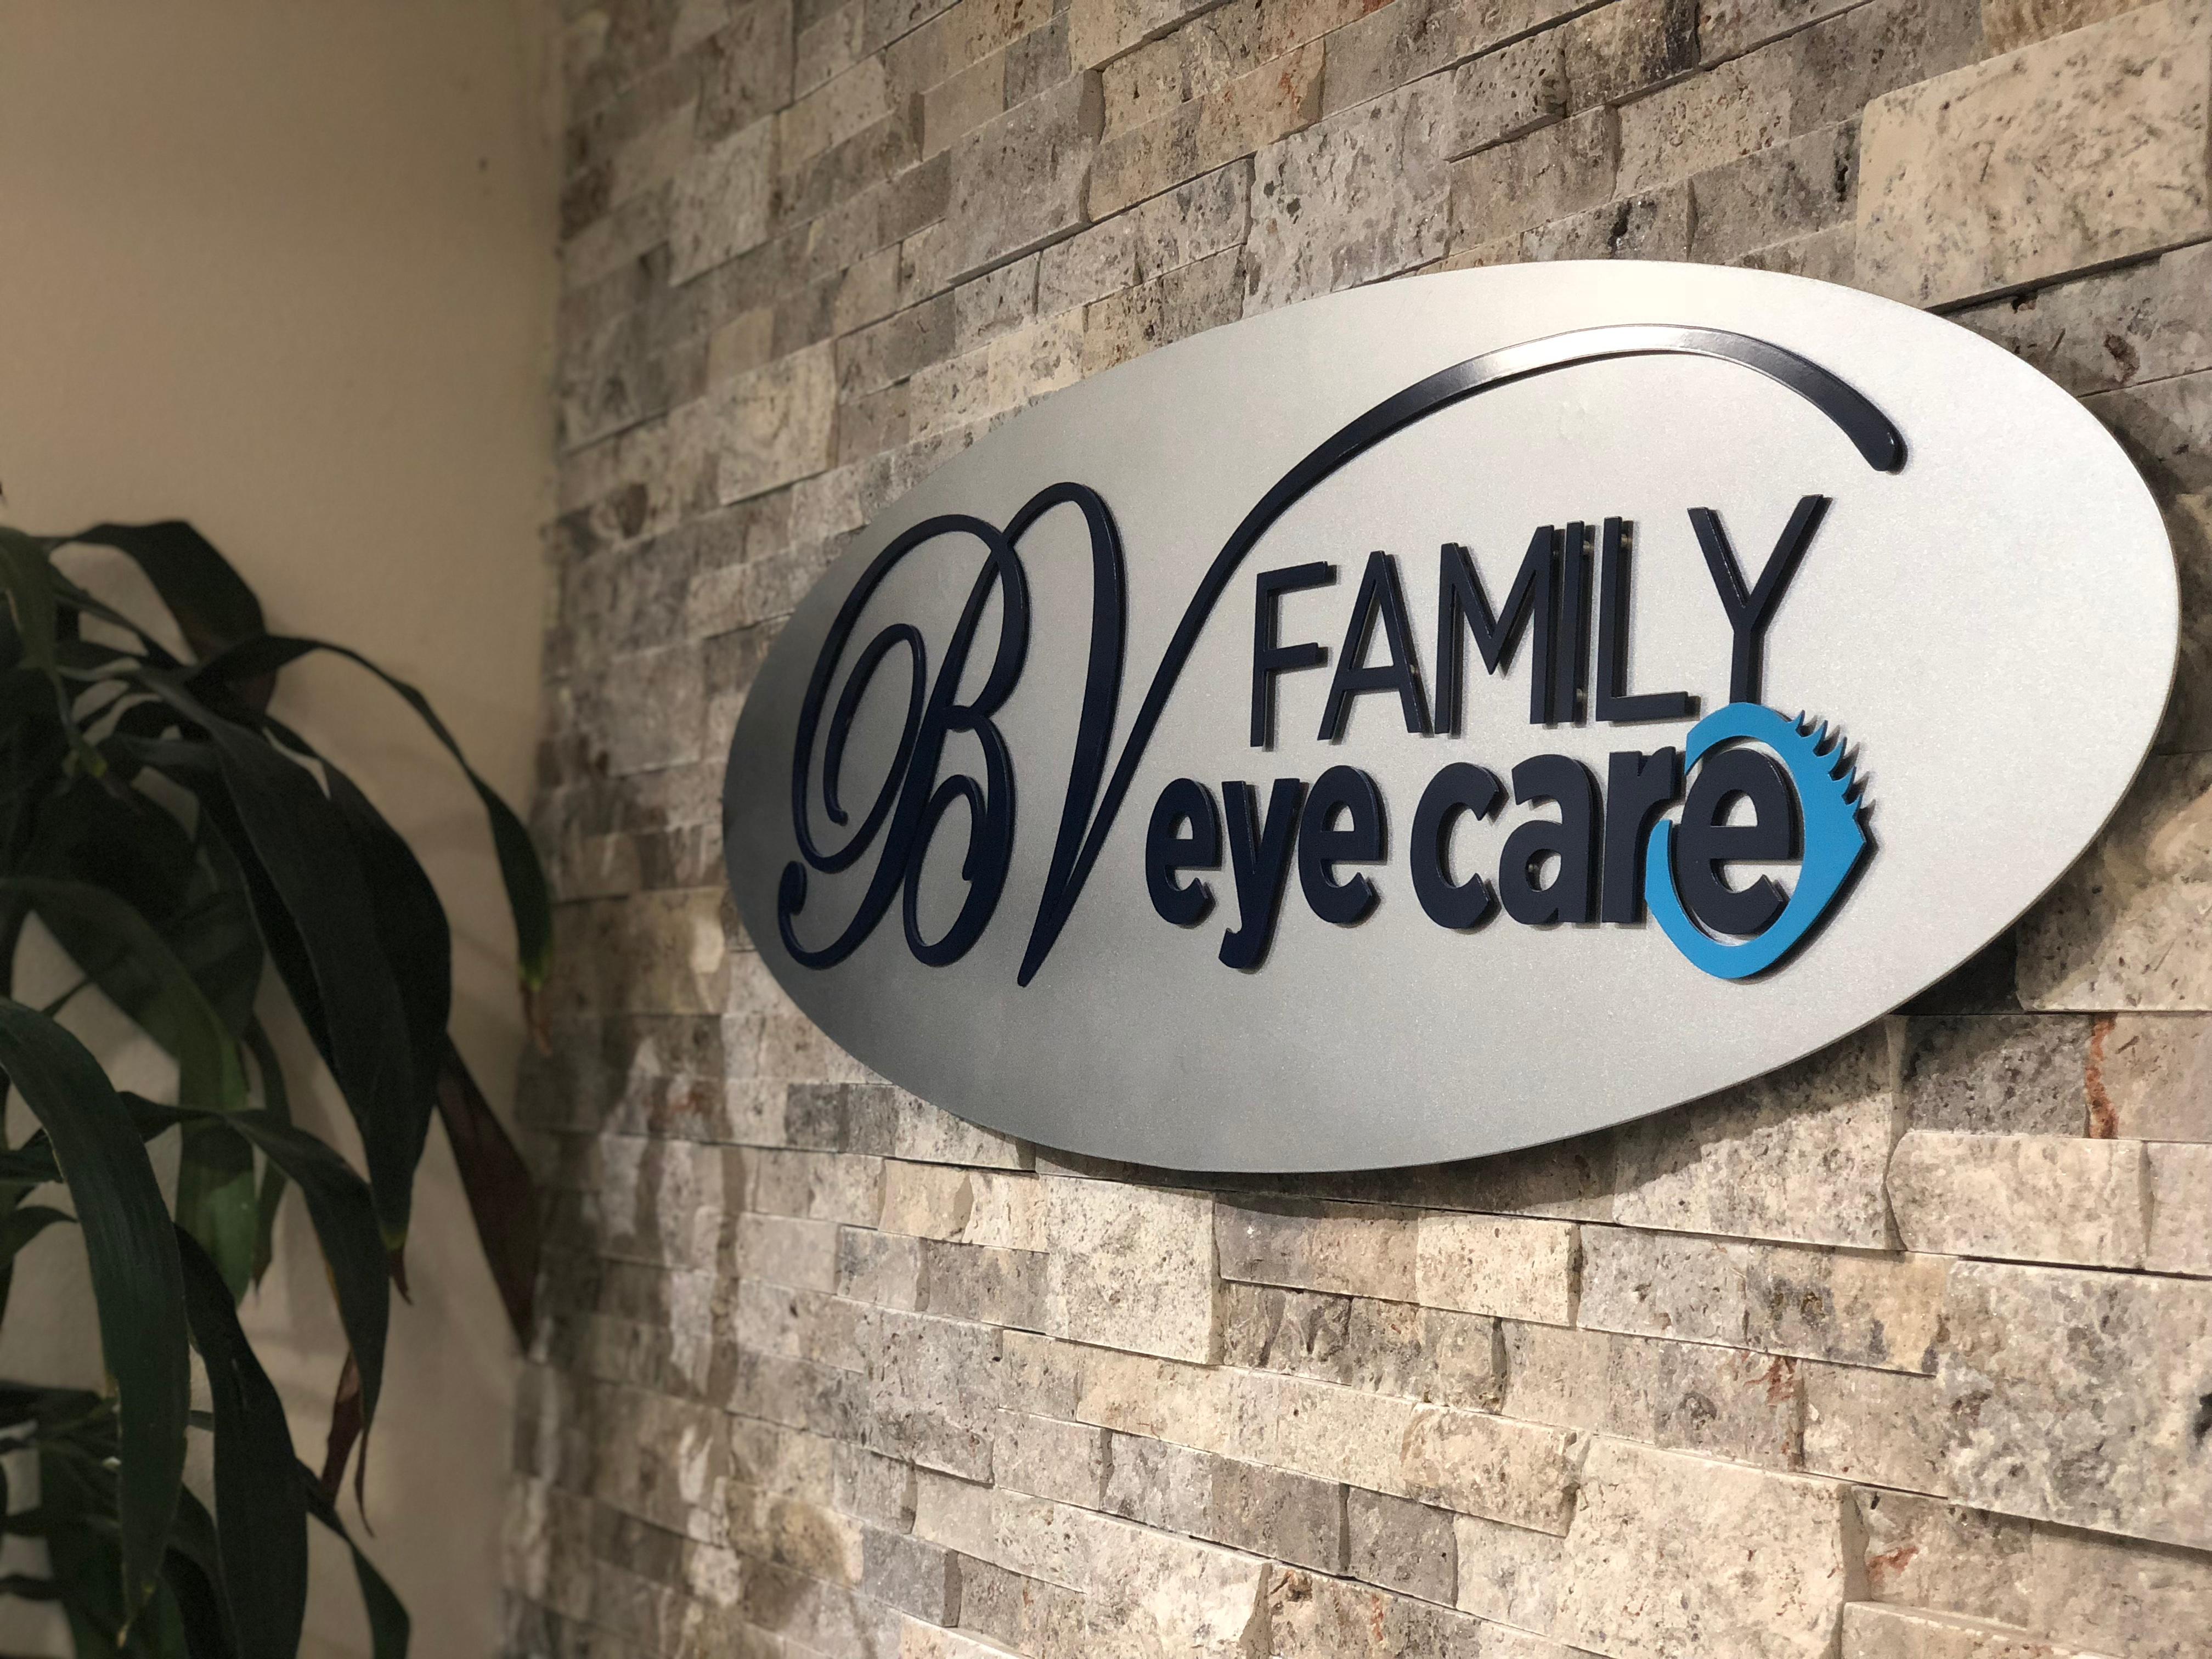 Bel Villaggio Family Eye Care Photo